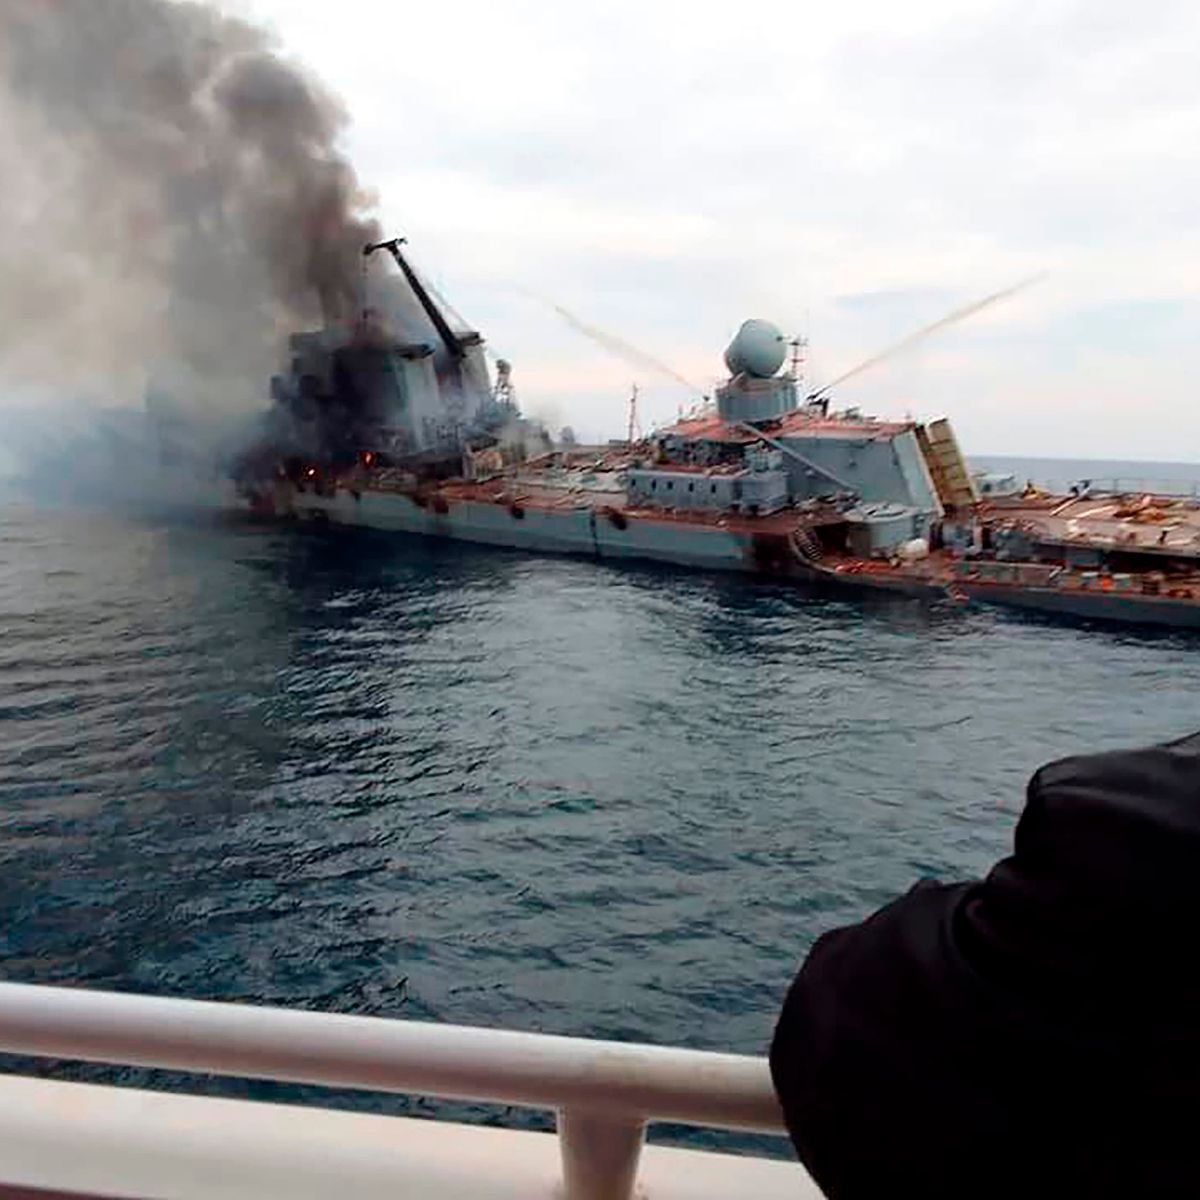 0_PAY-Moskva-cruiser-sinking-1-east2west-news.jpg